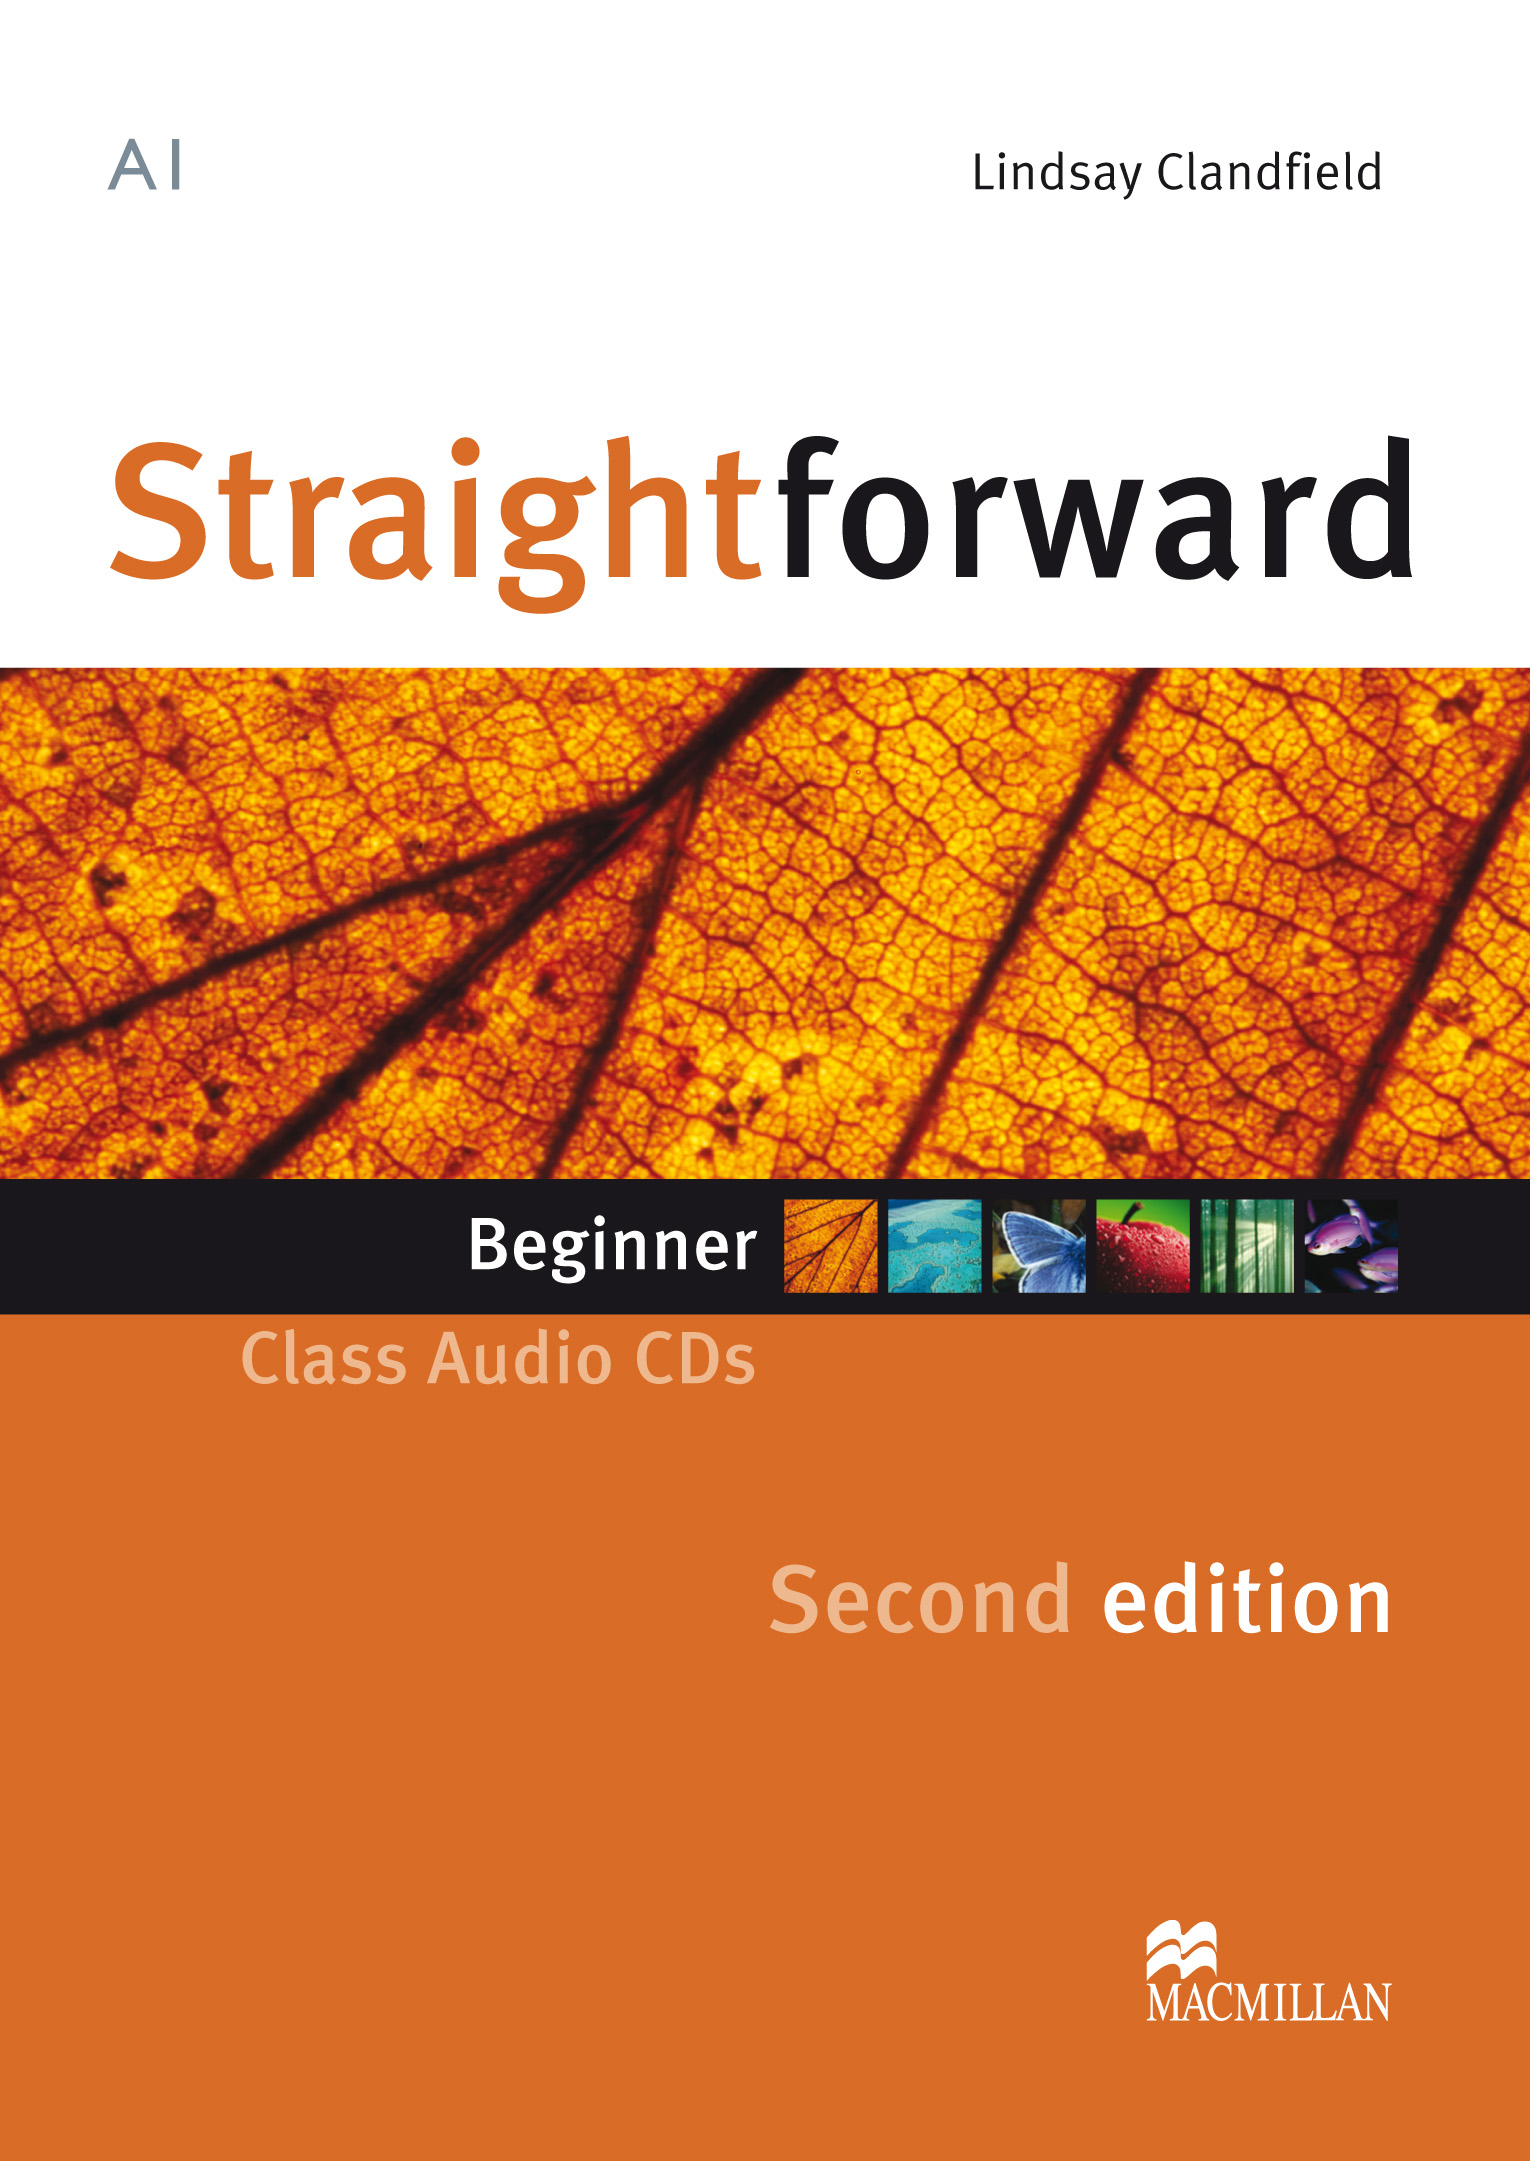 Straightforward (Second Edition) Beginner Class Audio CDs / Аудиодиски